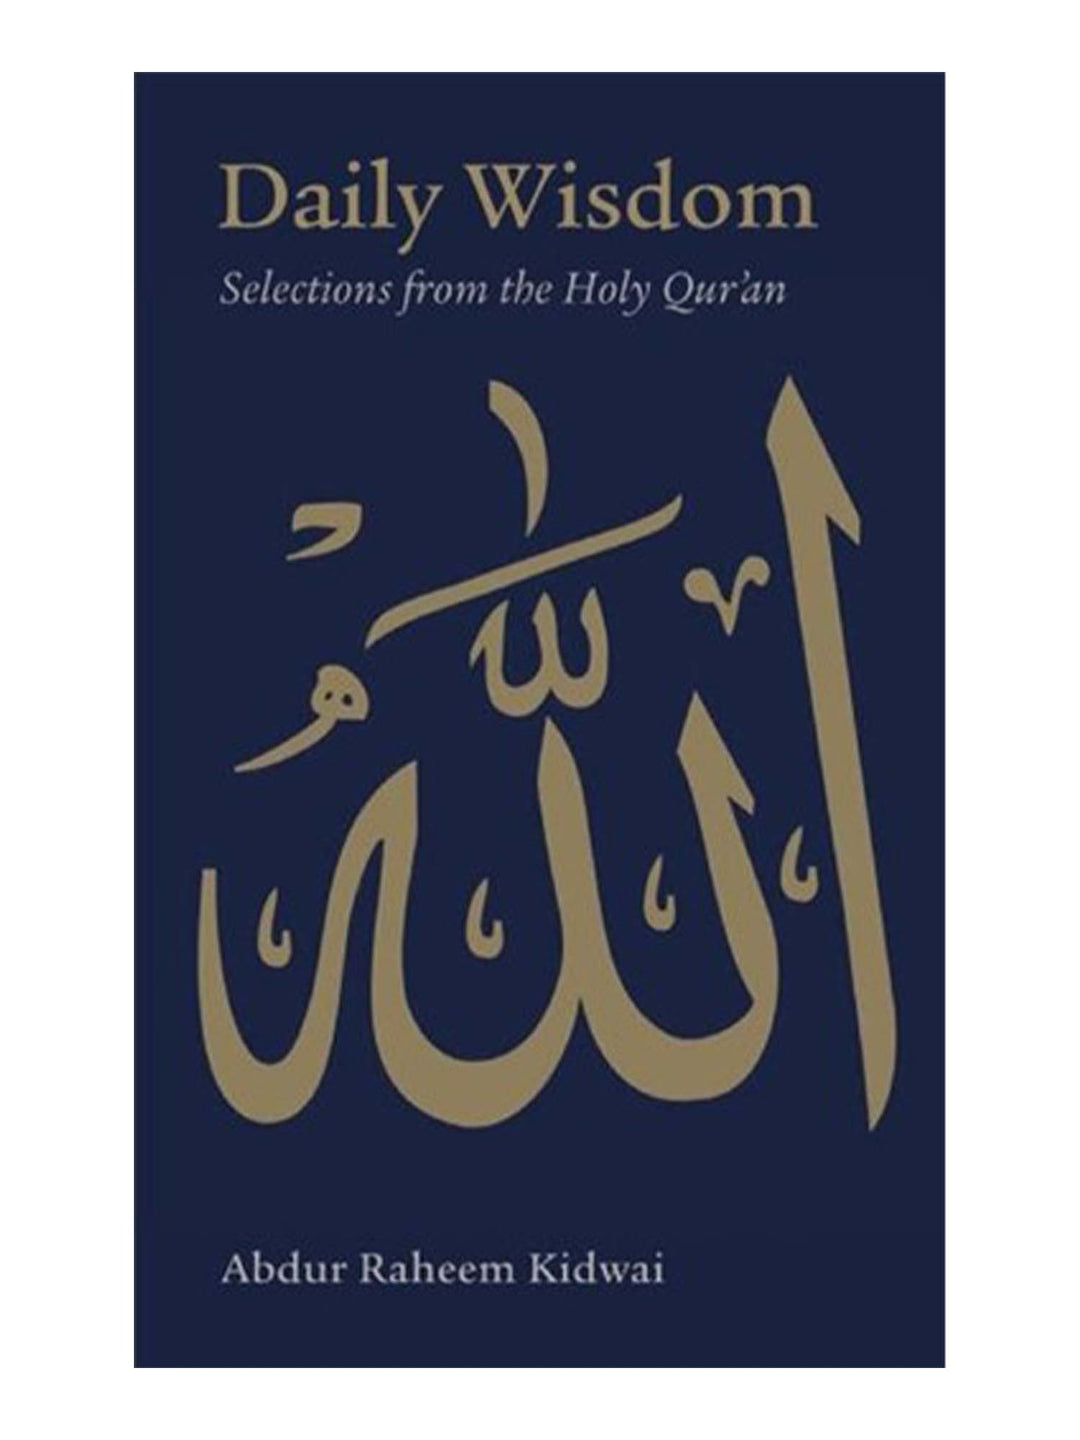 Daily Wisdom - Selections from the Holy Quran - Abdur Raheem Kidwai (Hardback)